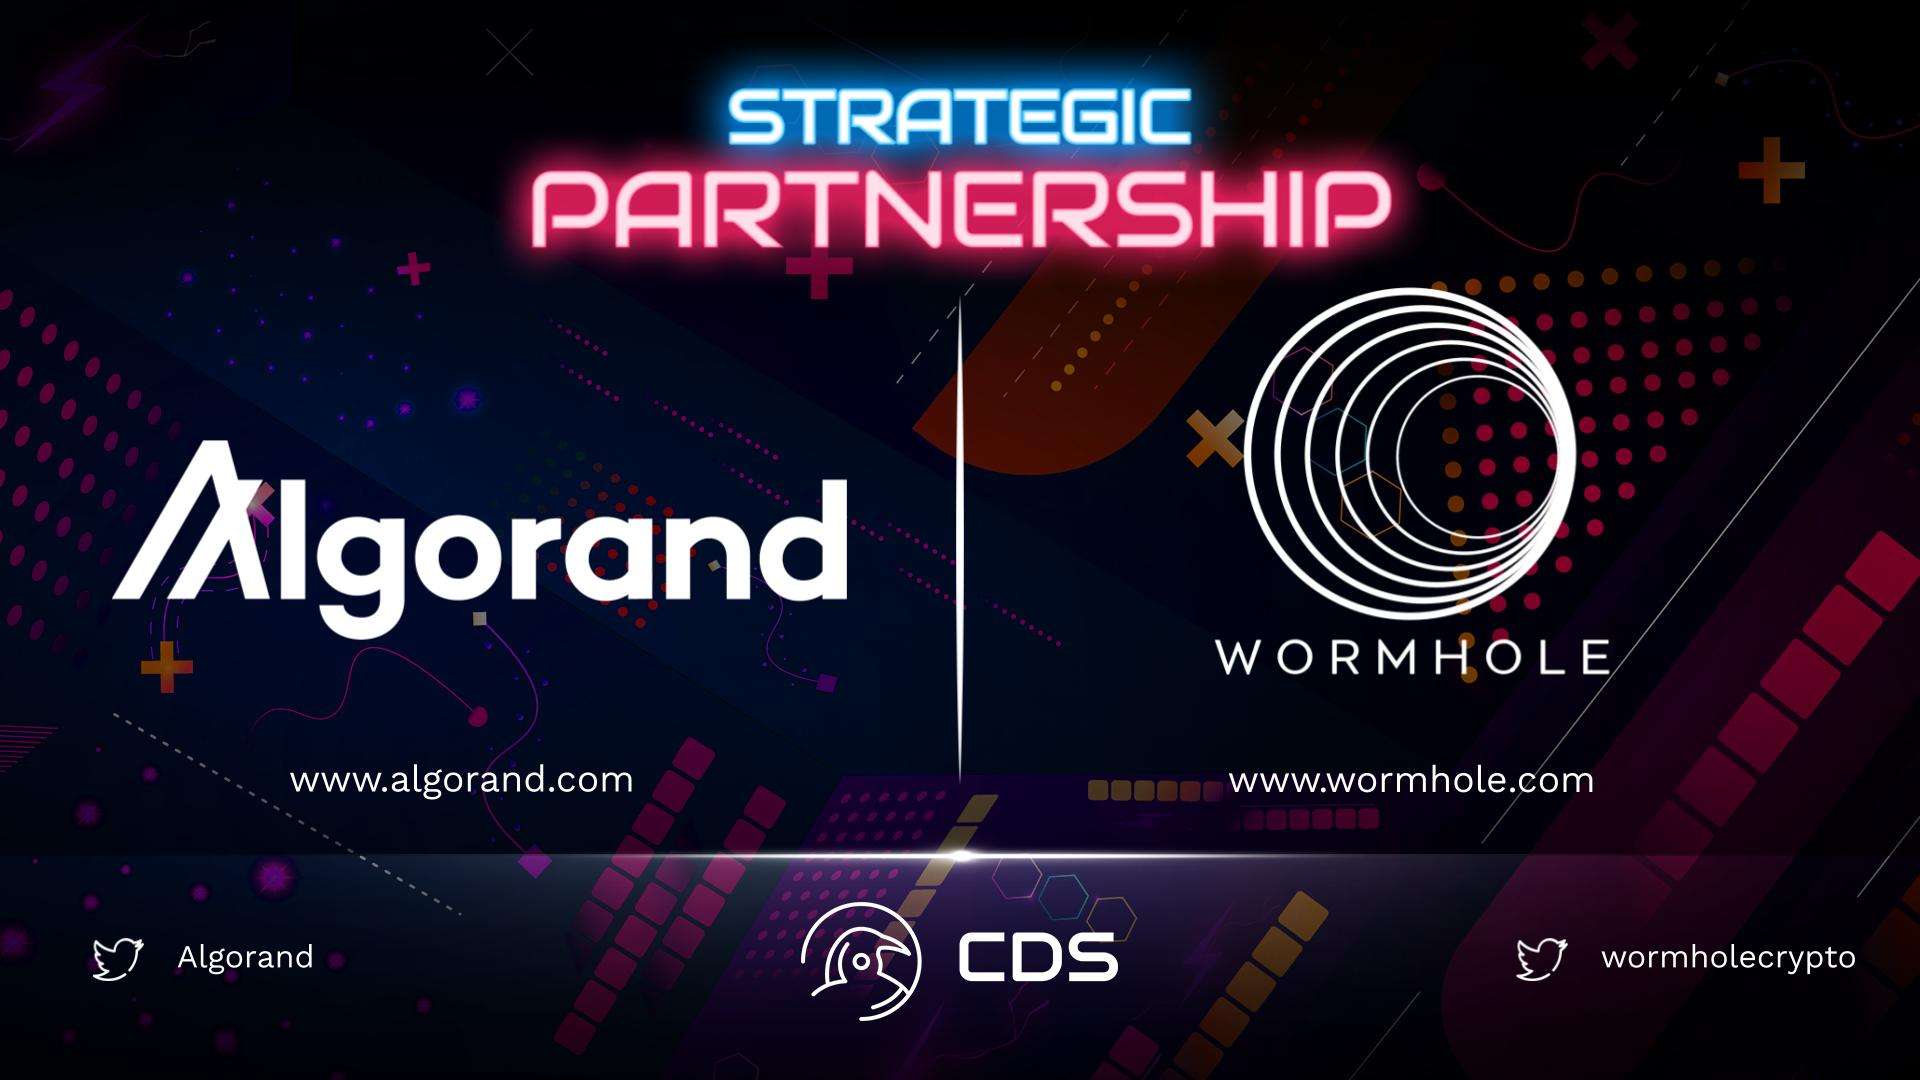 Wormhole and Algorand Strategic Partnership